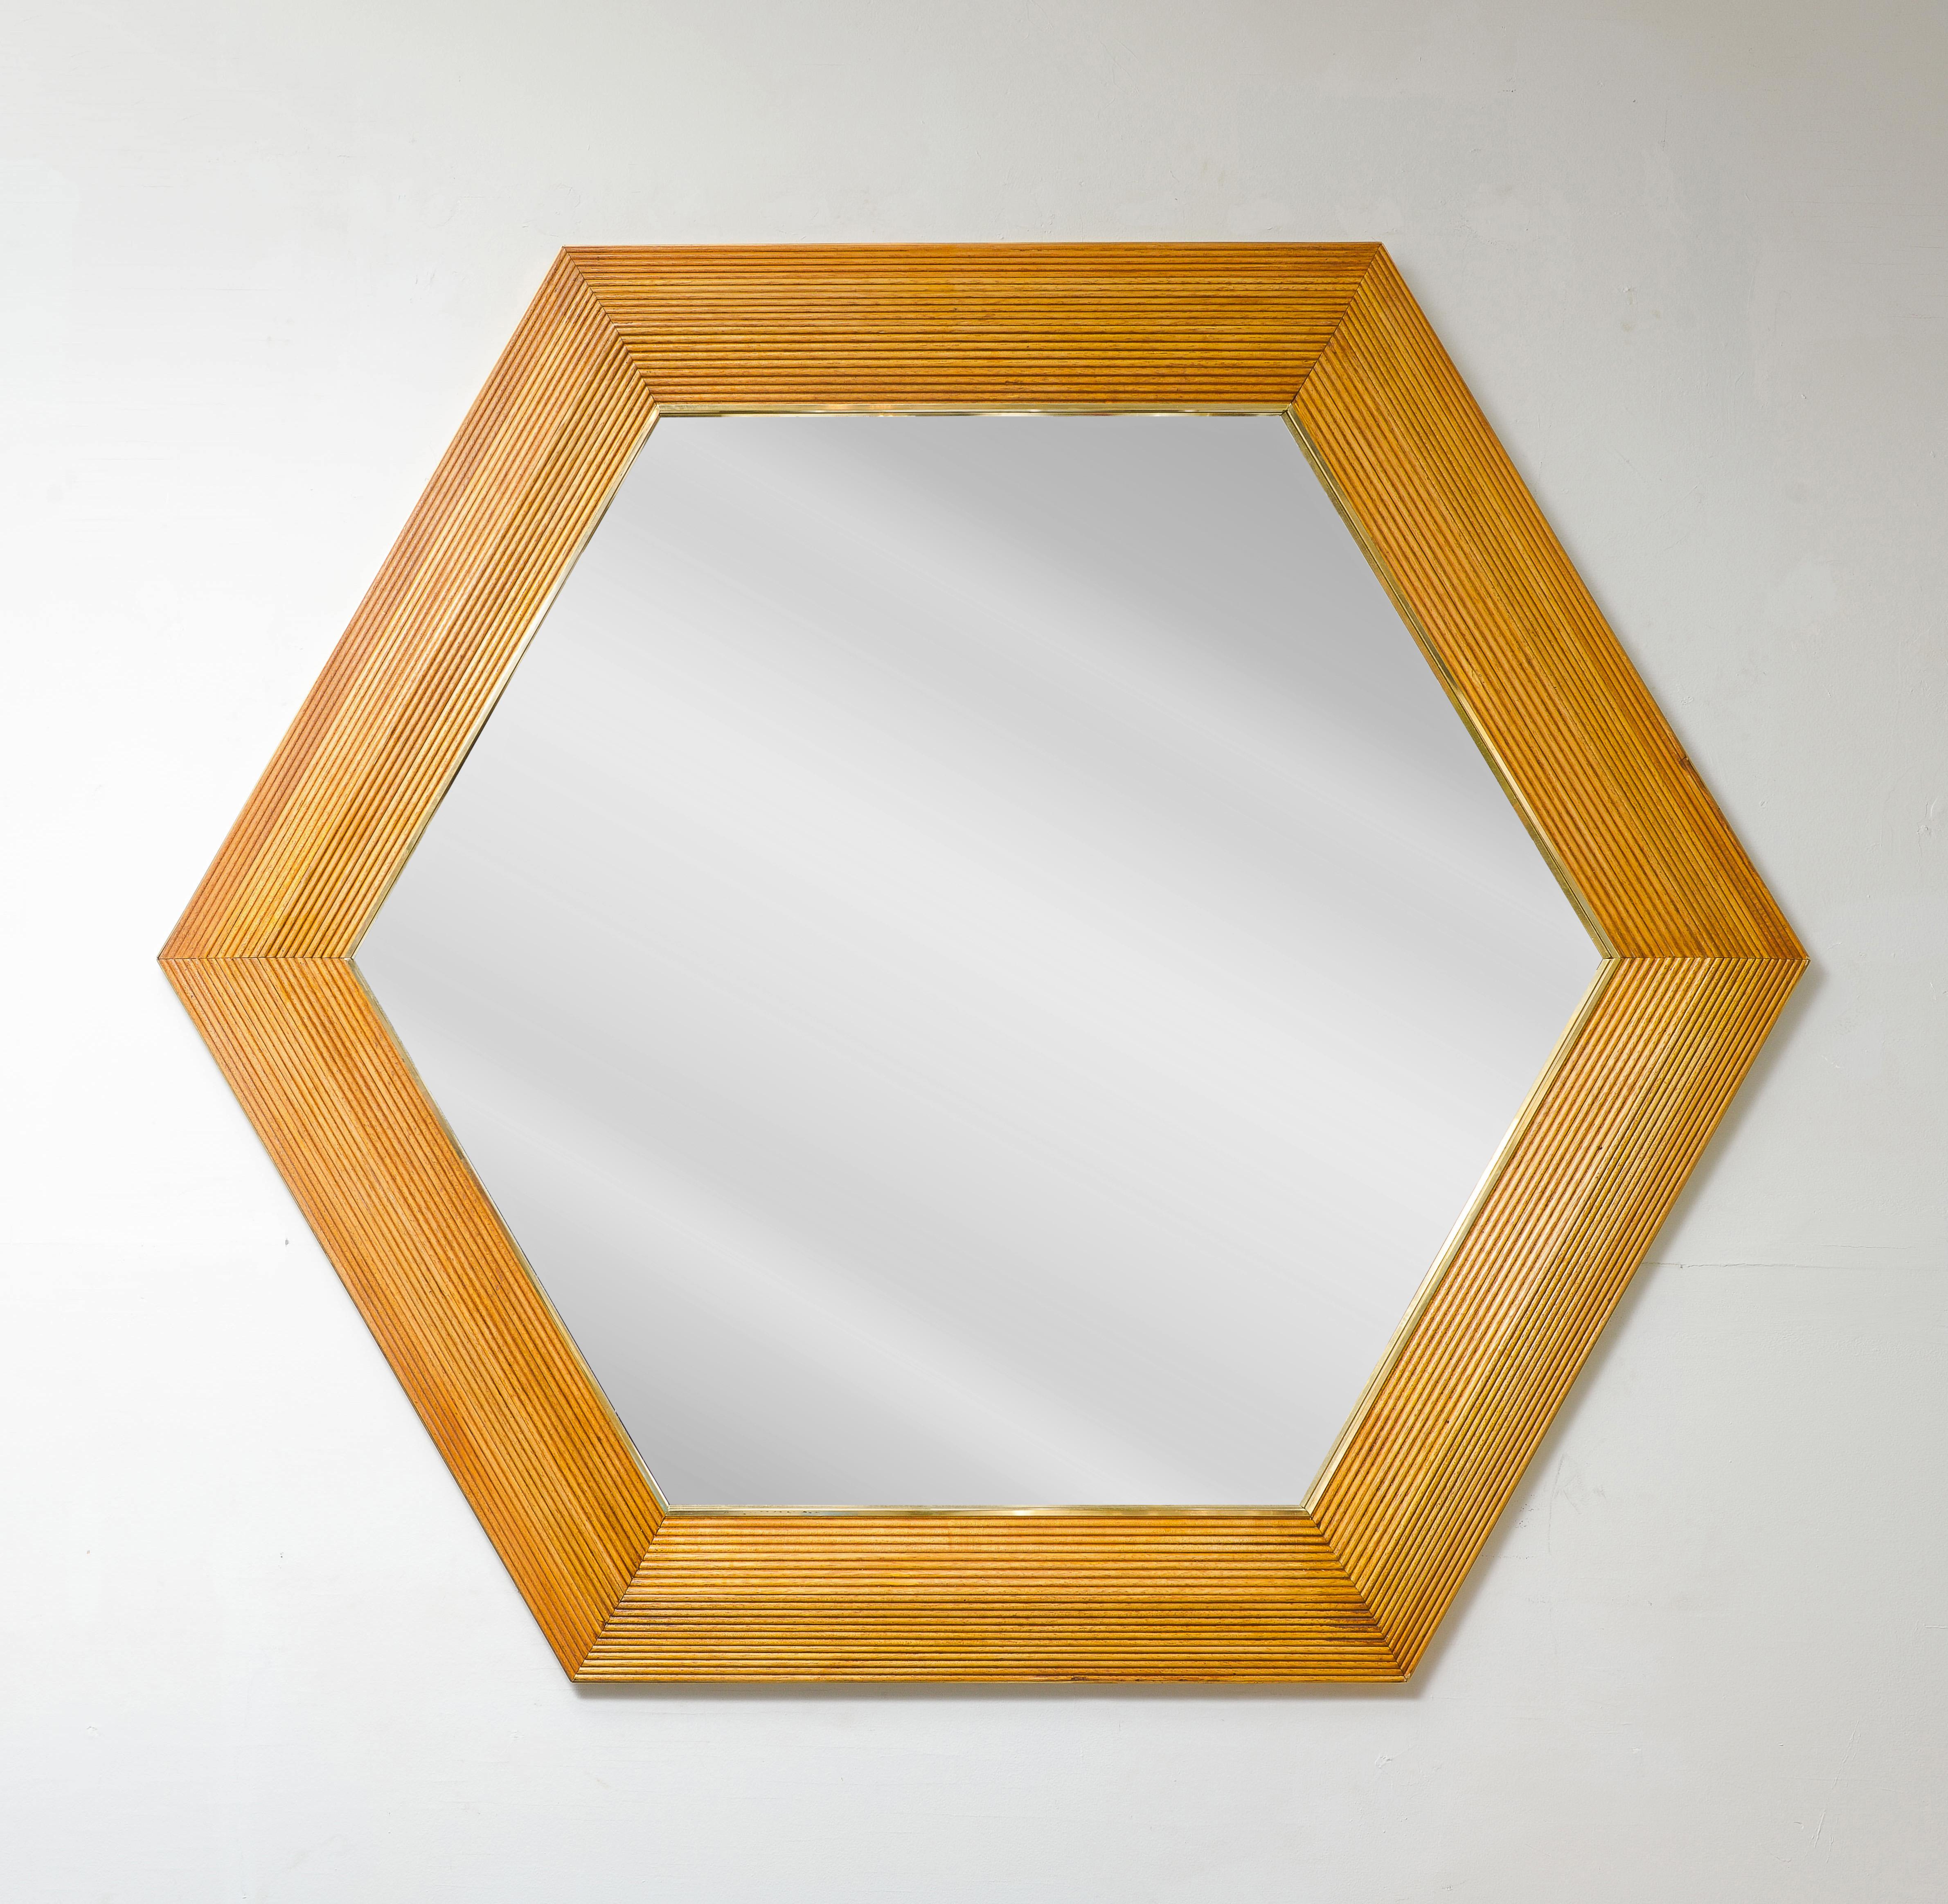 Contemporary Italian Hexagonal Rattan Mirror.